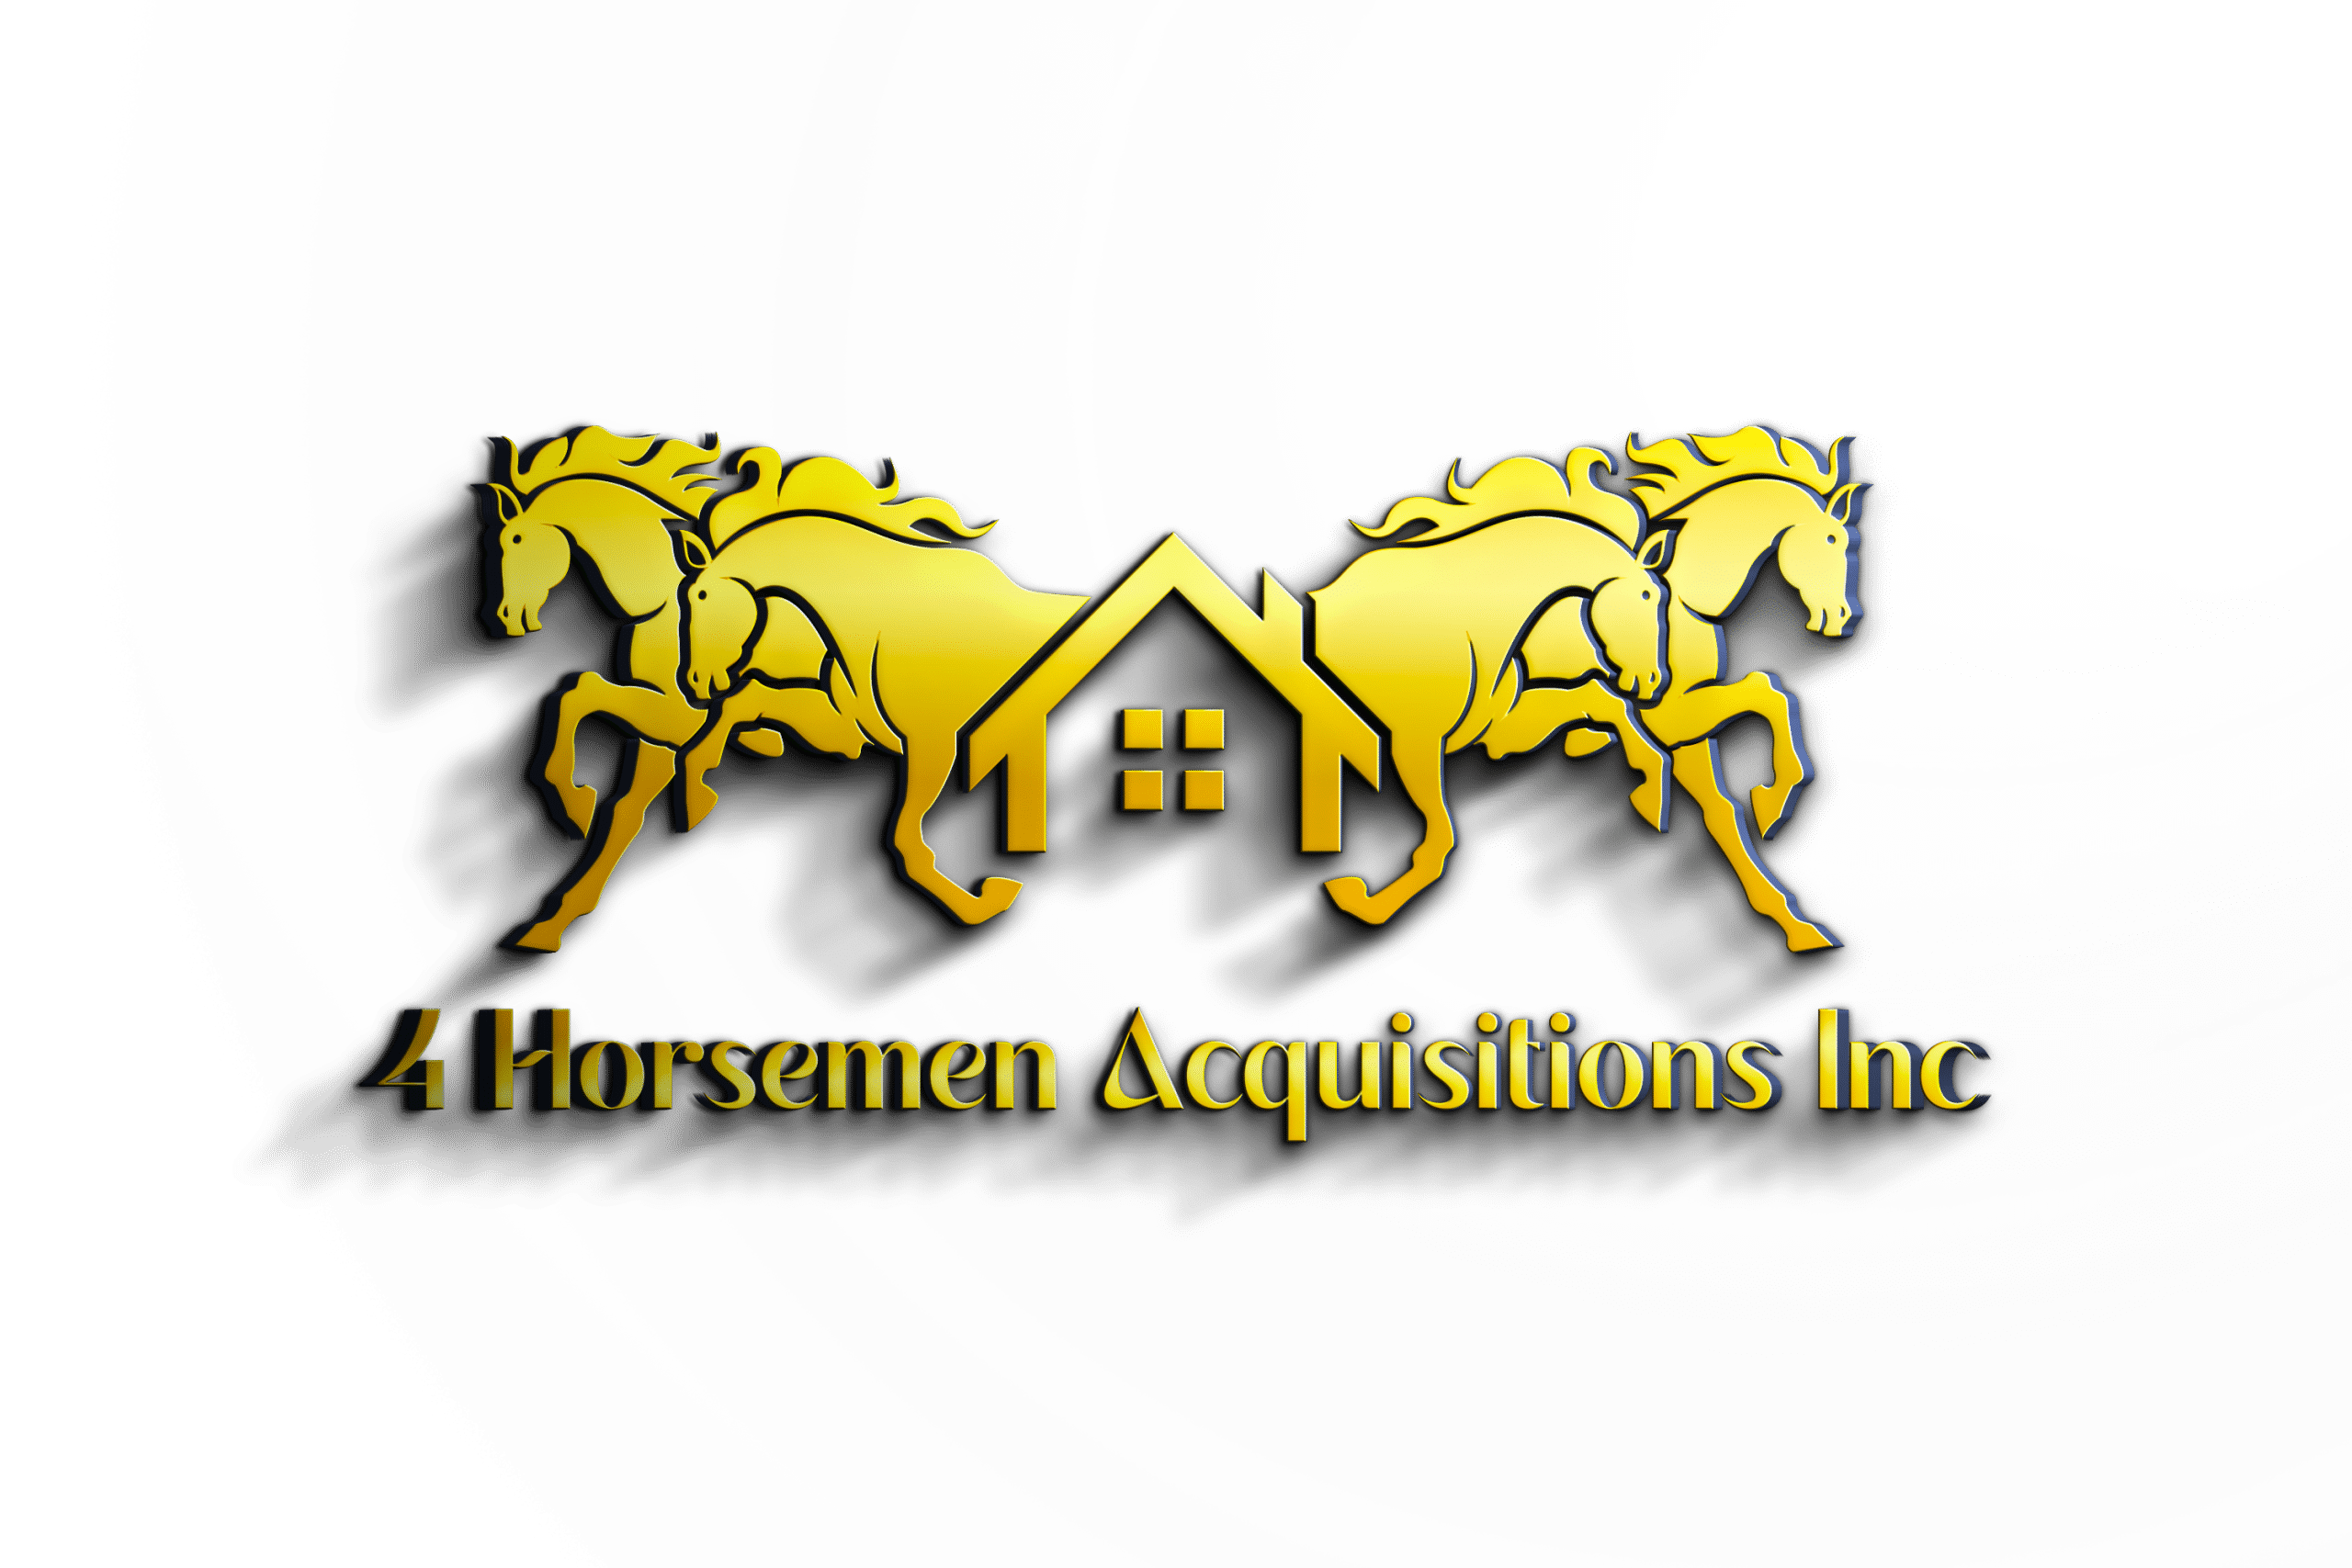 4 Horsemen Acquisitions Inc.